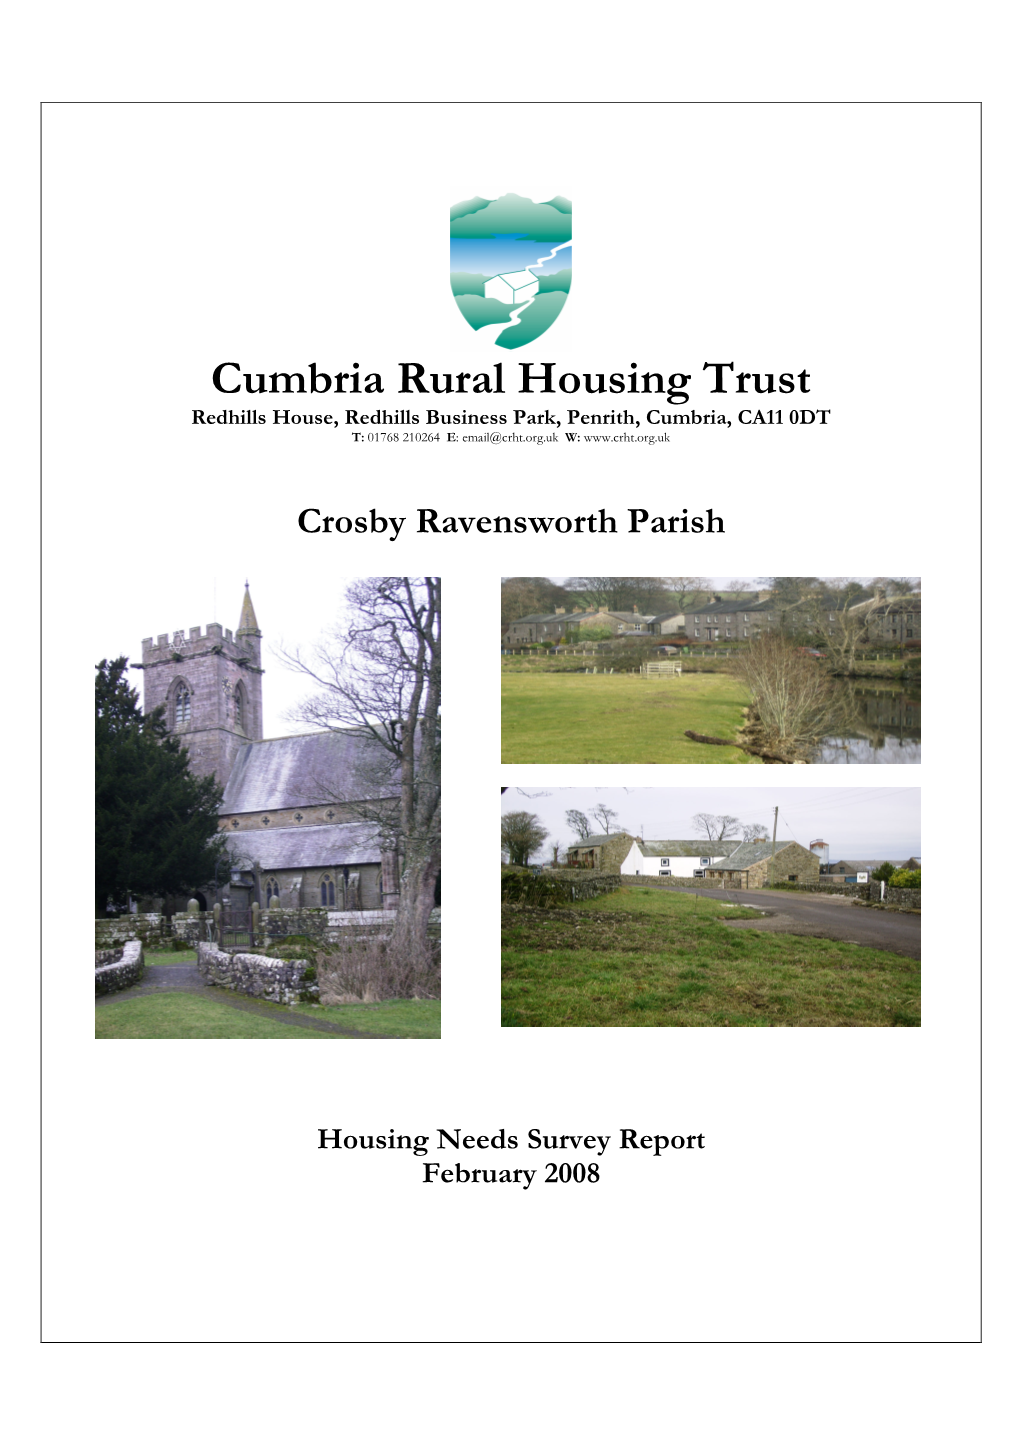 Housing Needs Survey Report February 2008